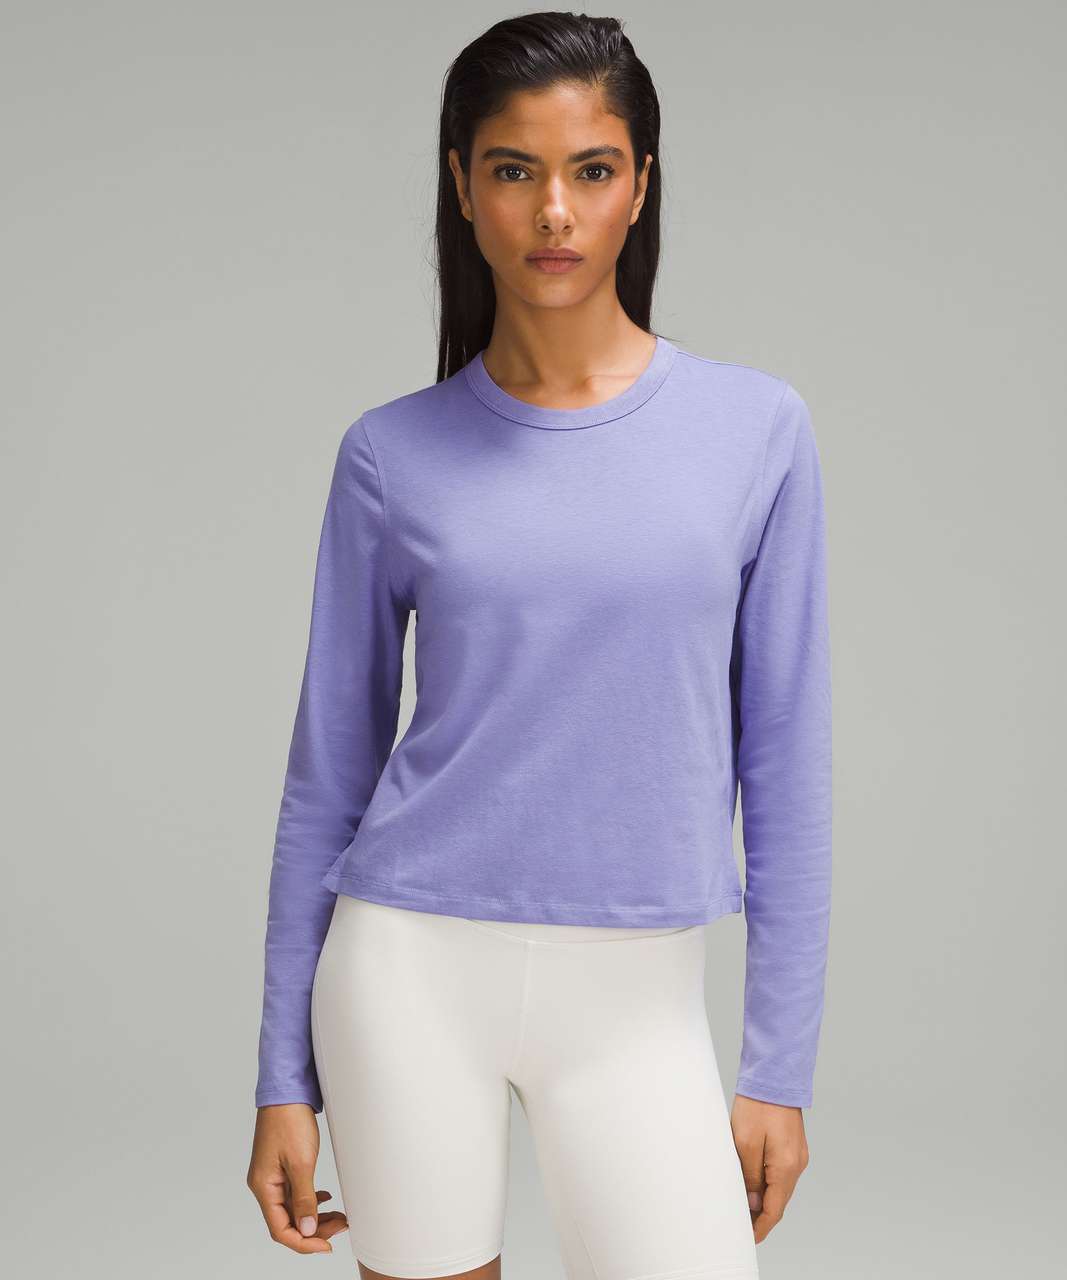 Lululemon Classic-Fit Cotton-Blend Long-Sleeve Shirt - Dark Lavender